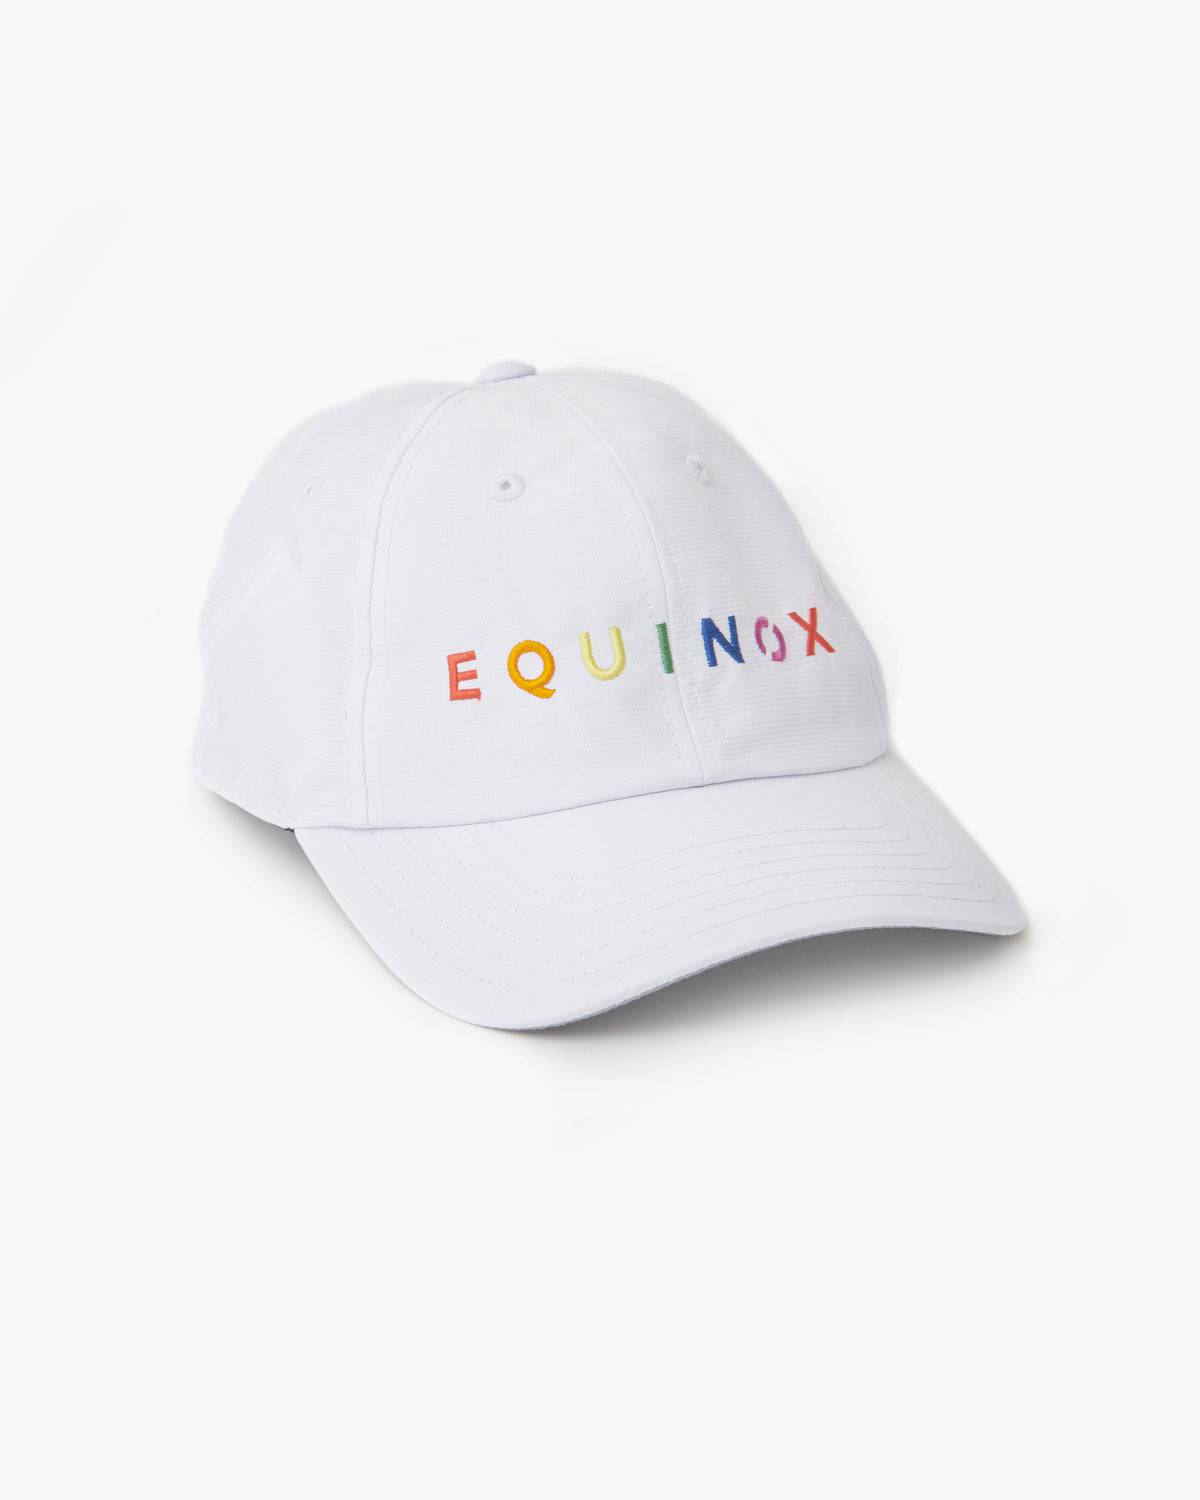 Equinox Performance Hat